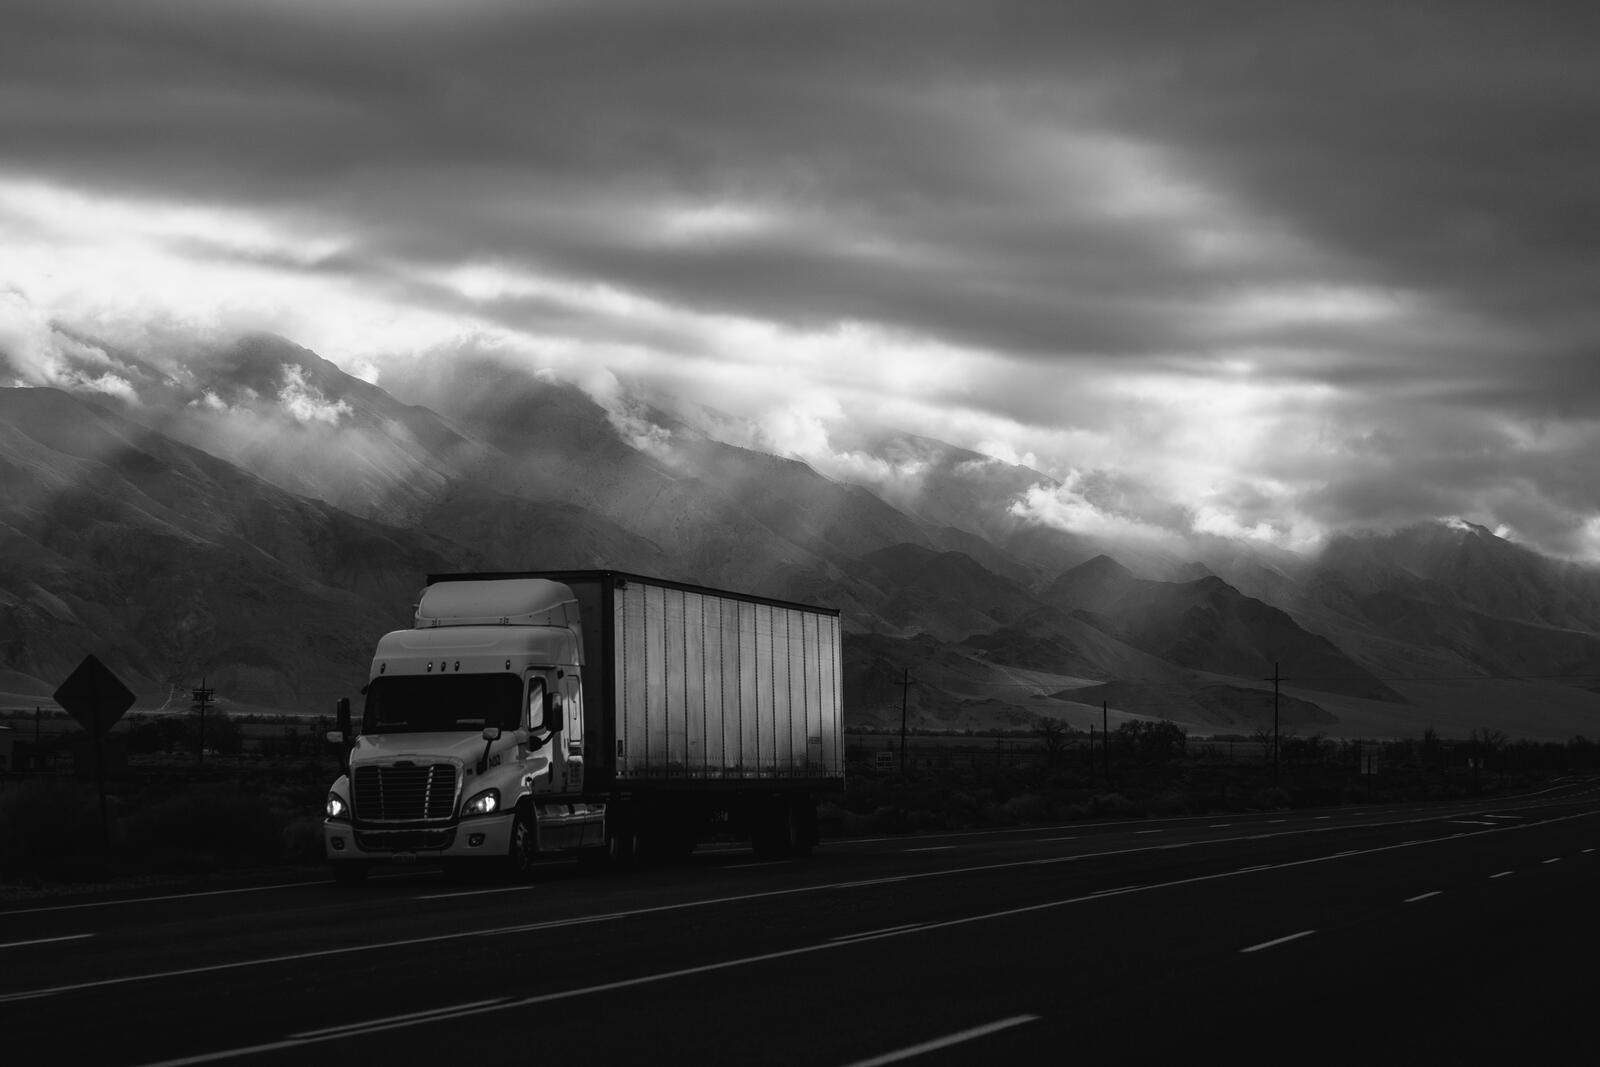 Бесплатное фото Американская фура едет по шоссе на монохромном фото